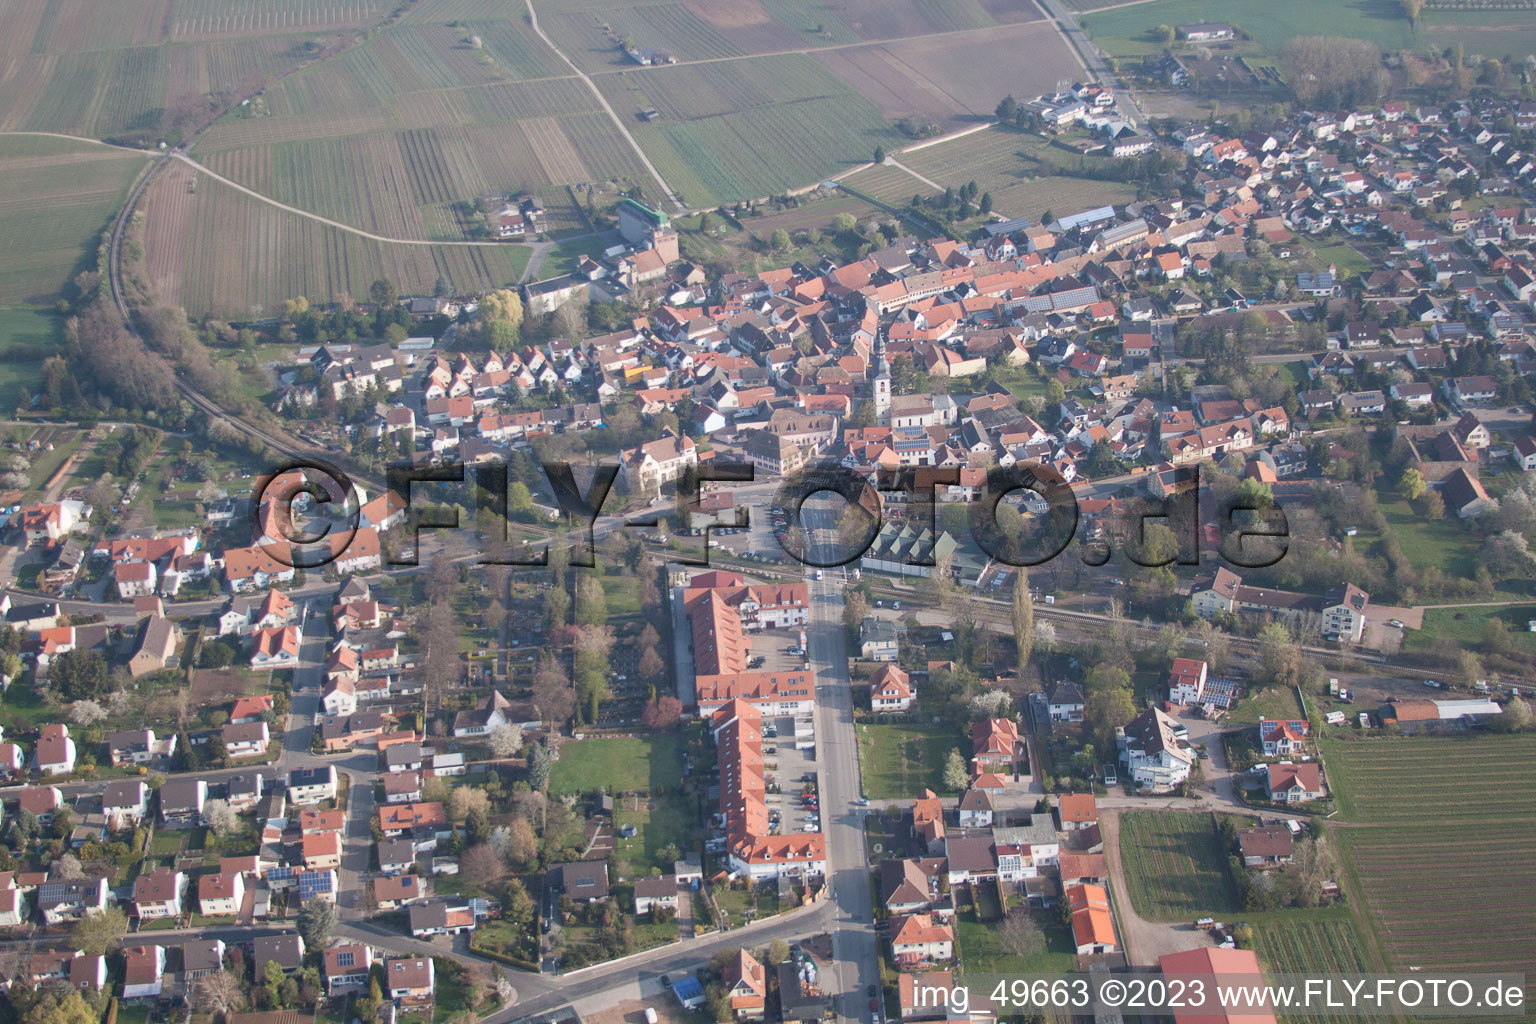 Kirchheim an der Weinstraße in the state Rhineland-Palatinate, Germany seen from a drone